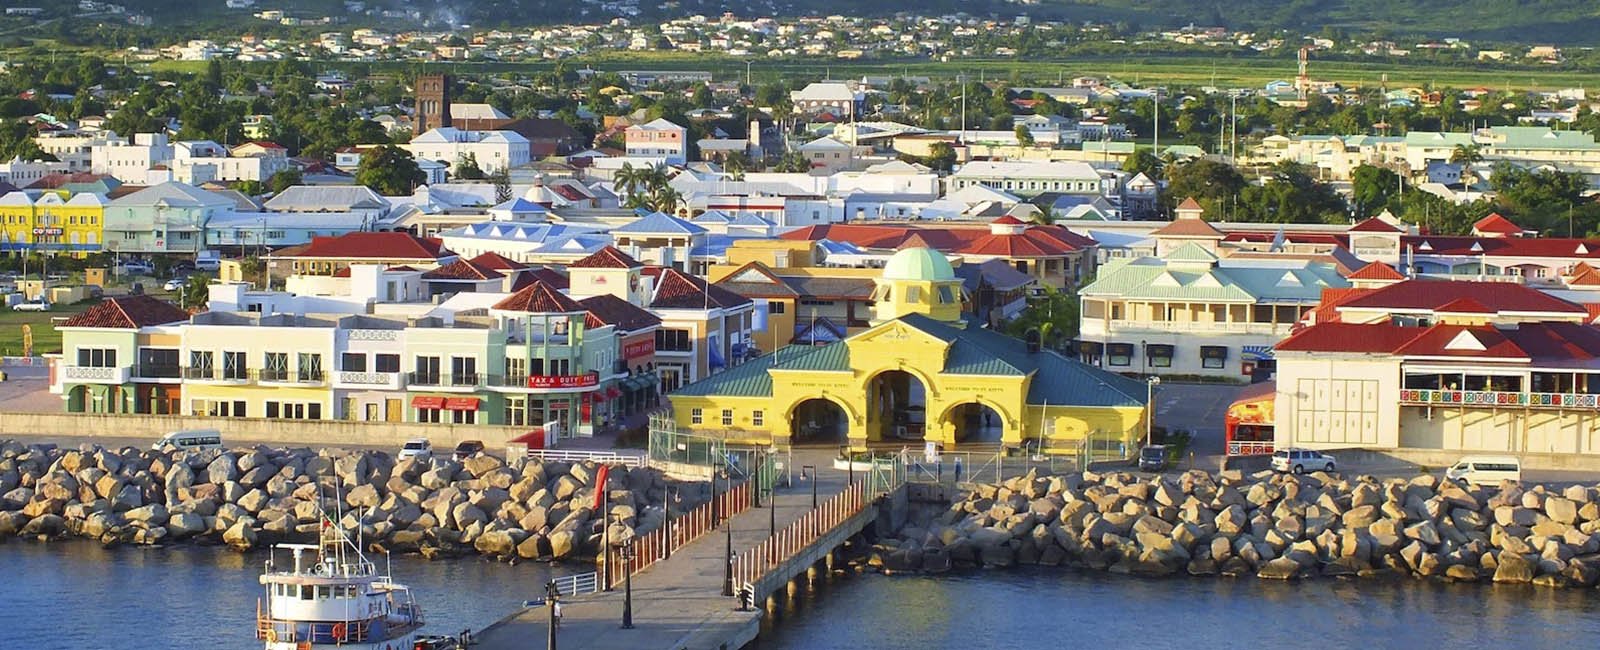 Saint Kitts & Nevis Citizenship by Investment Program